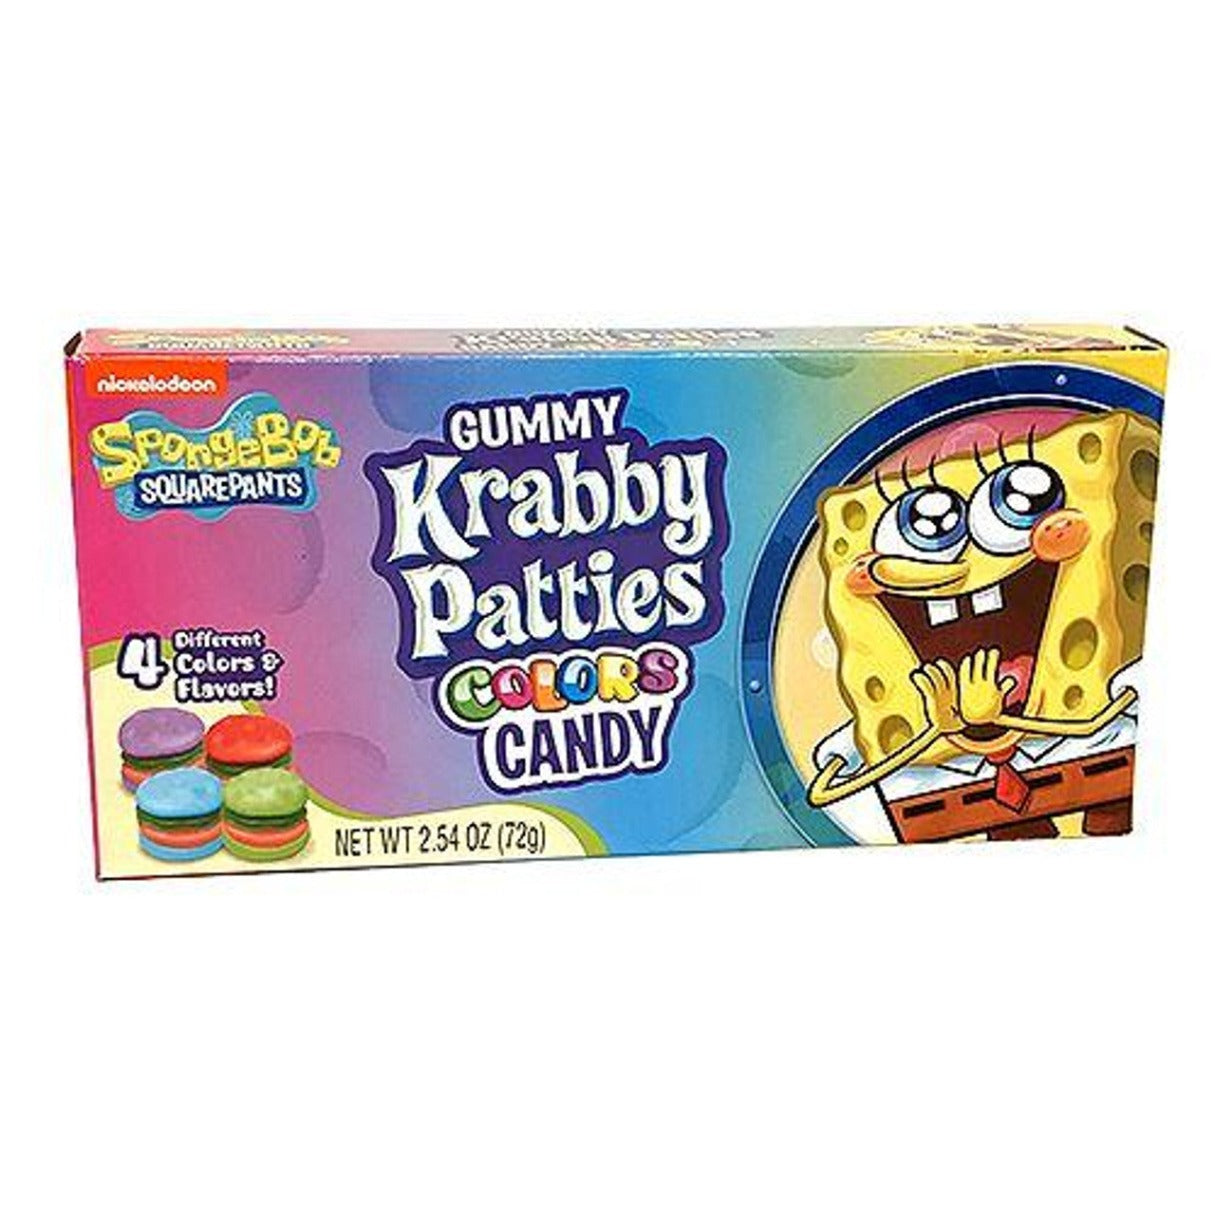 Frankford Gummy Krabby Patties Colors Candy Box 2.54oz - 12ct